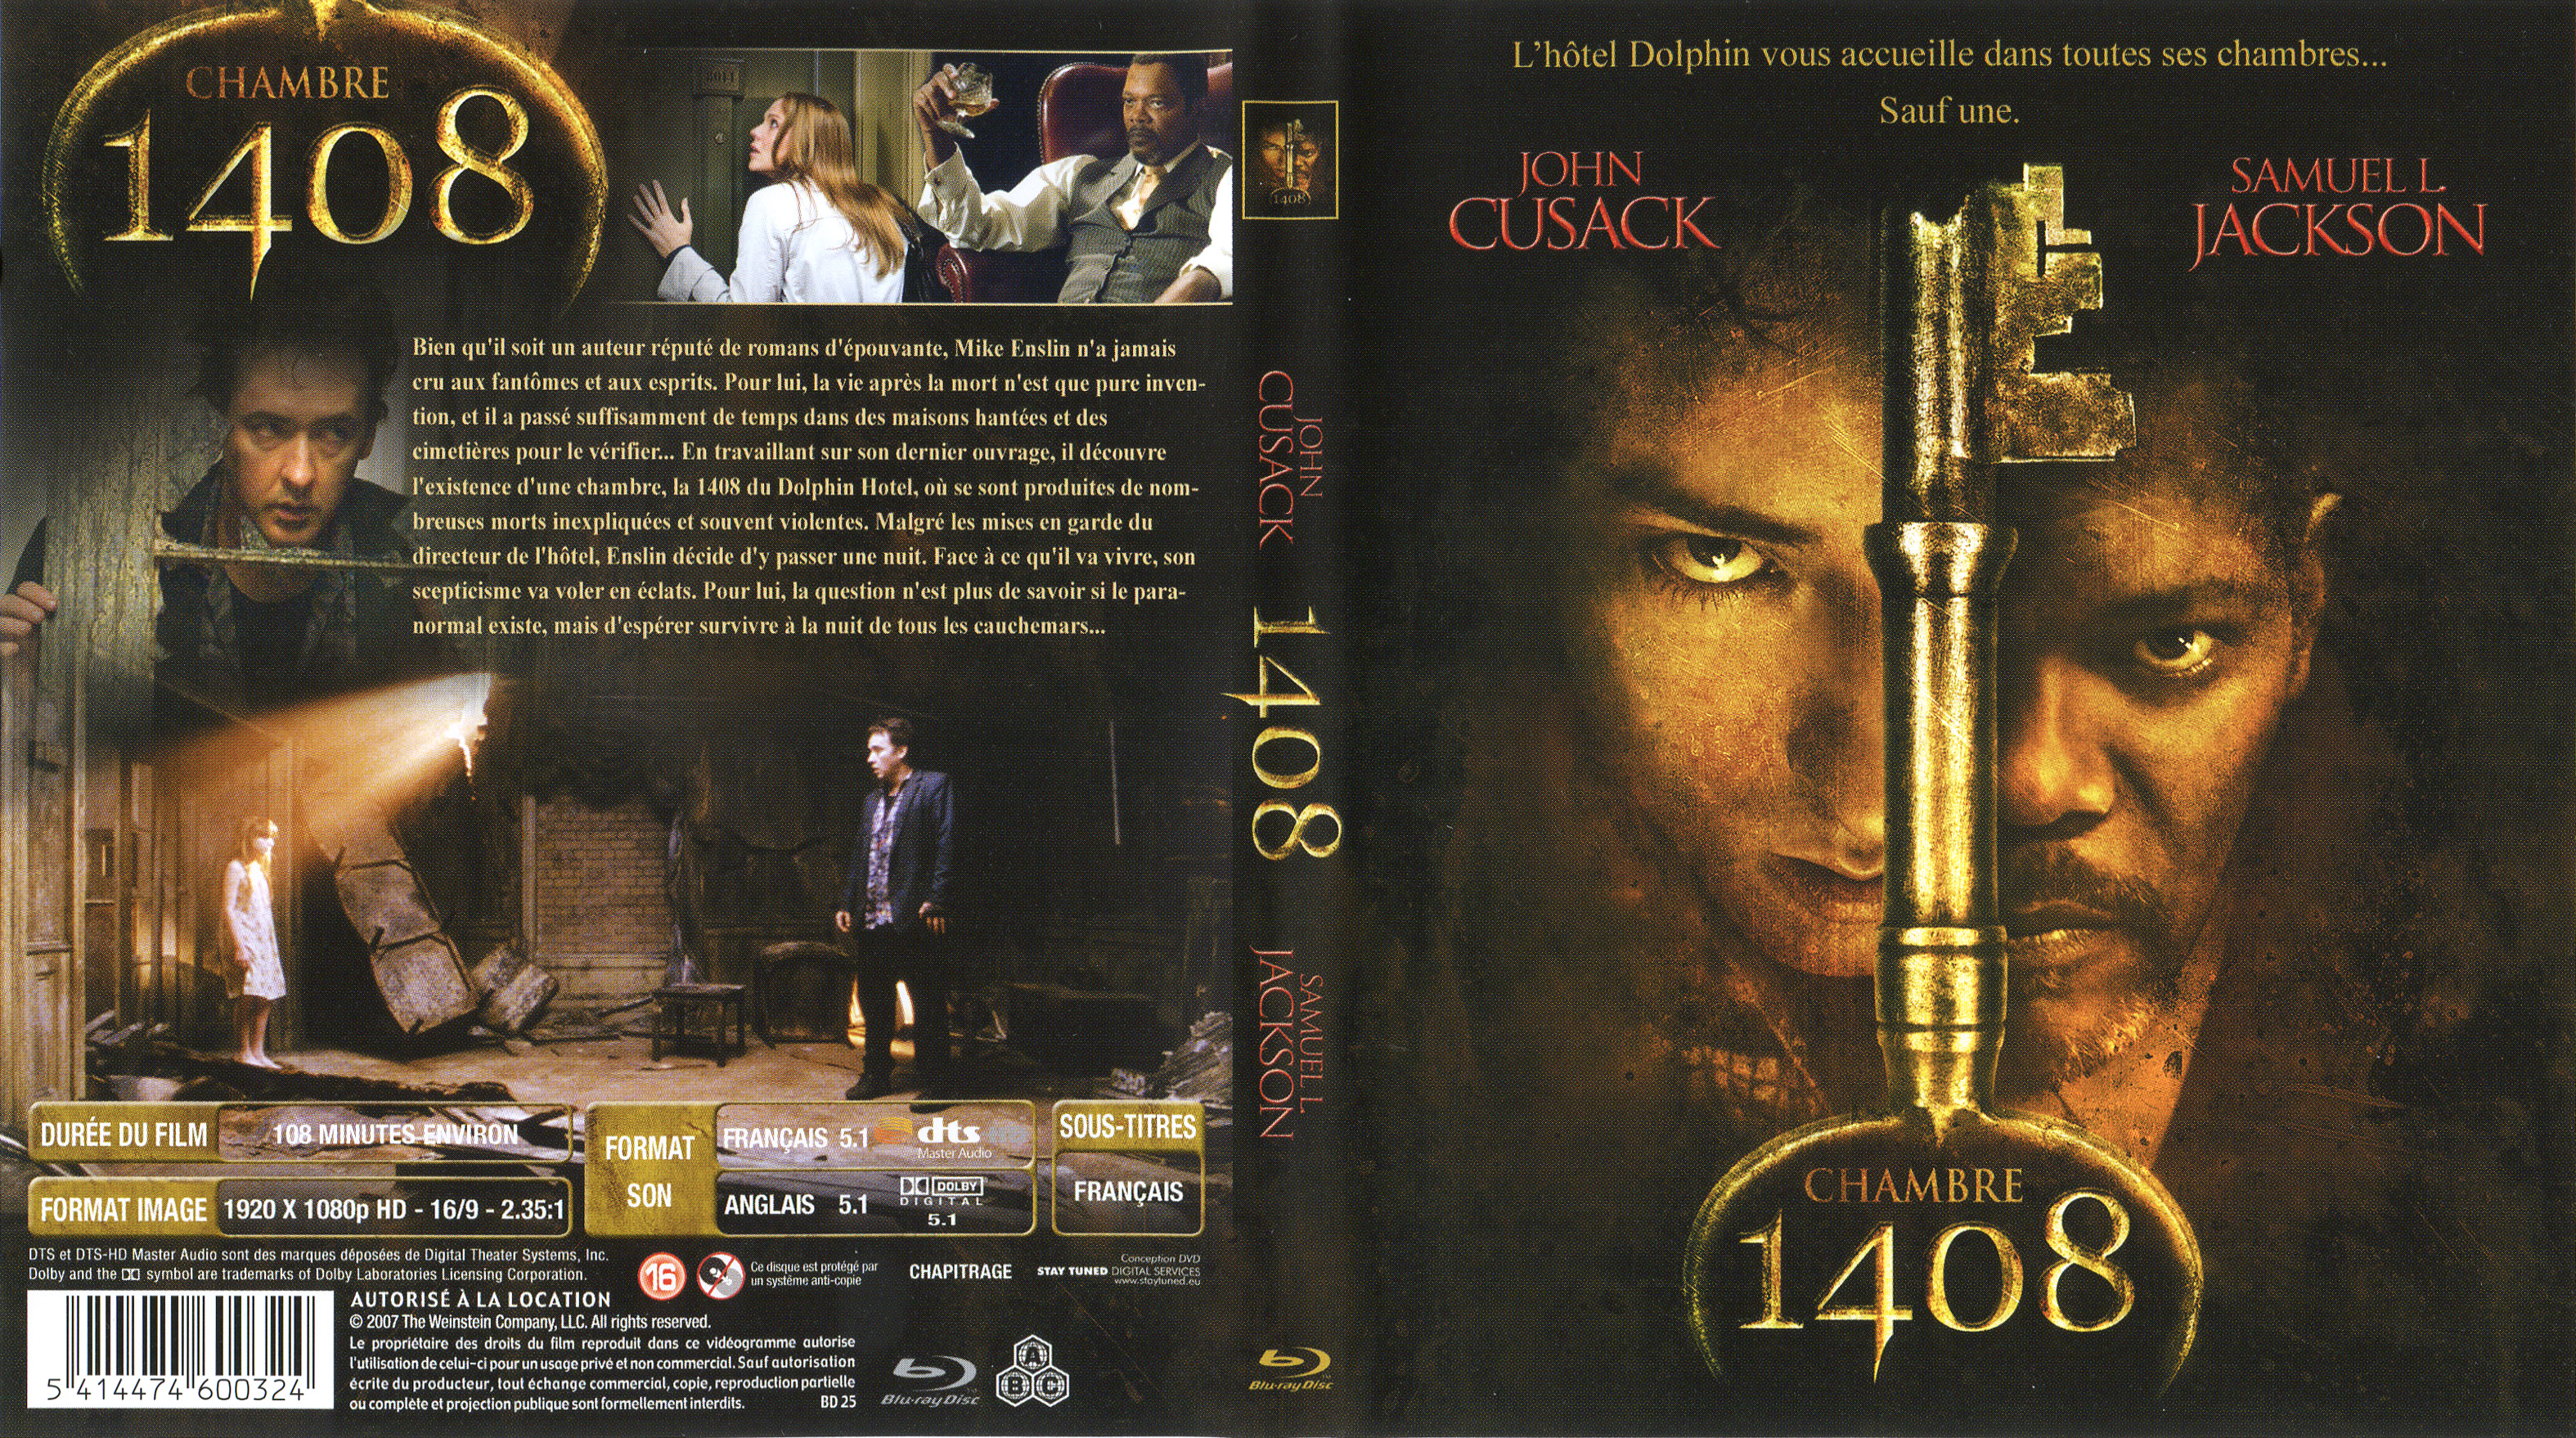 Jaquette DVD Chambre 1408 (BLU-RAY)